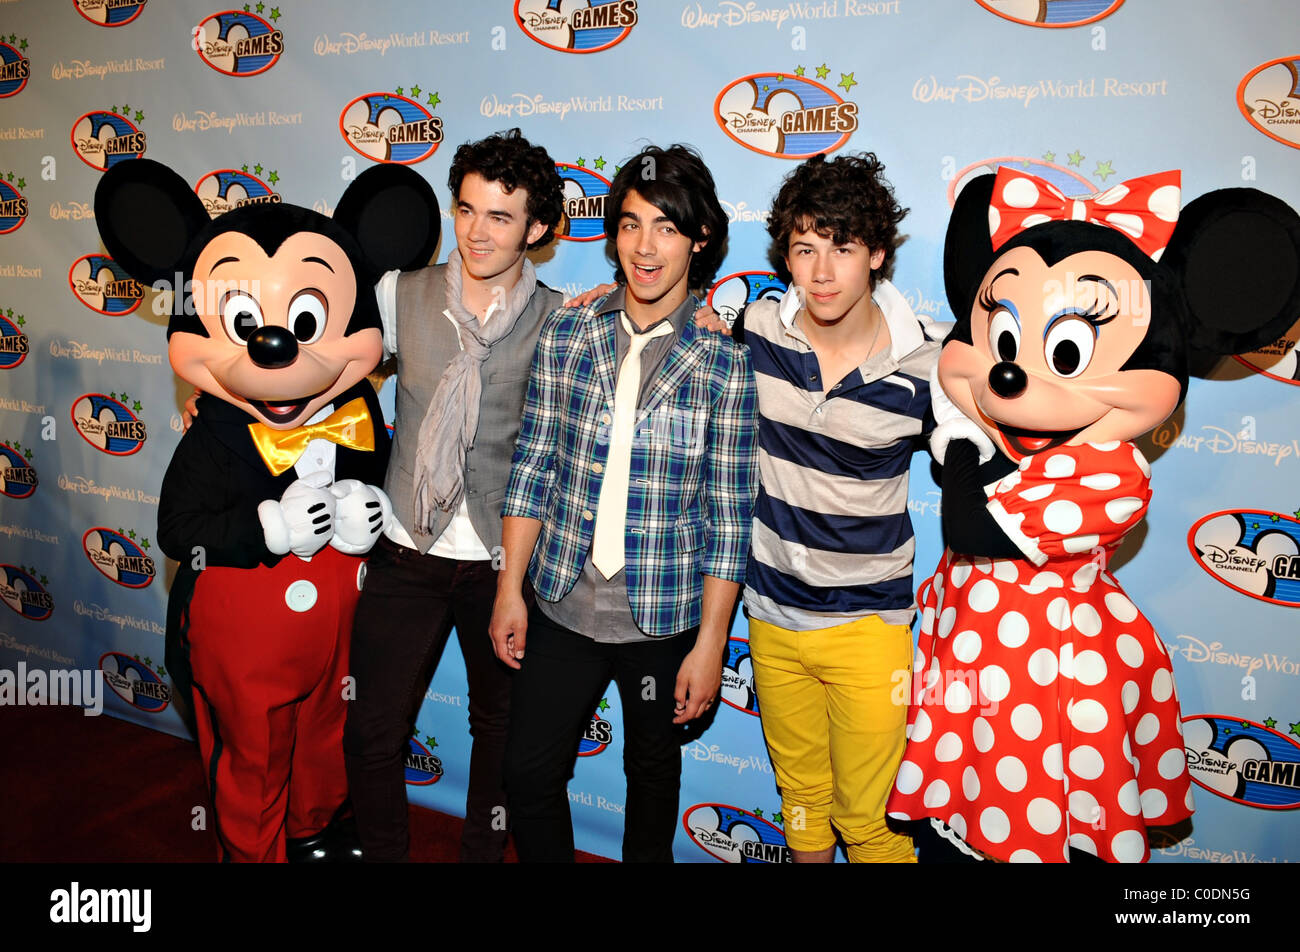 Jonas Brothers Disney Channel Games at Walt Disney World- Red Carpet  Orlando, Florida - 02.05.08 Shannon Livingston Stock Photo - Alamy